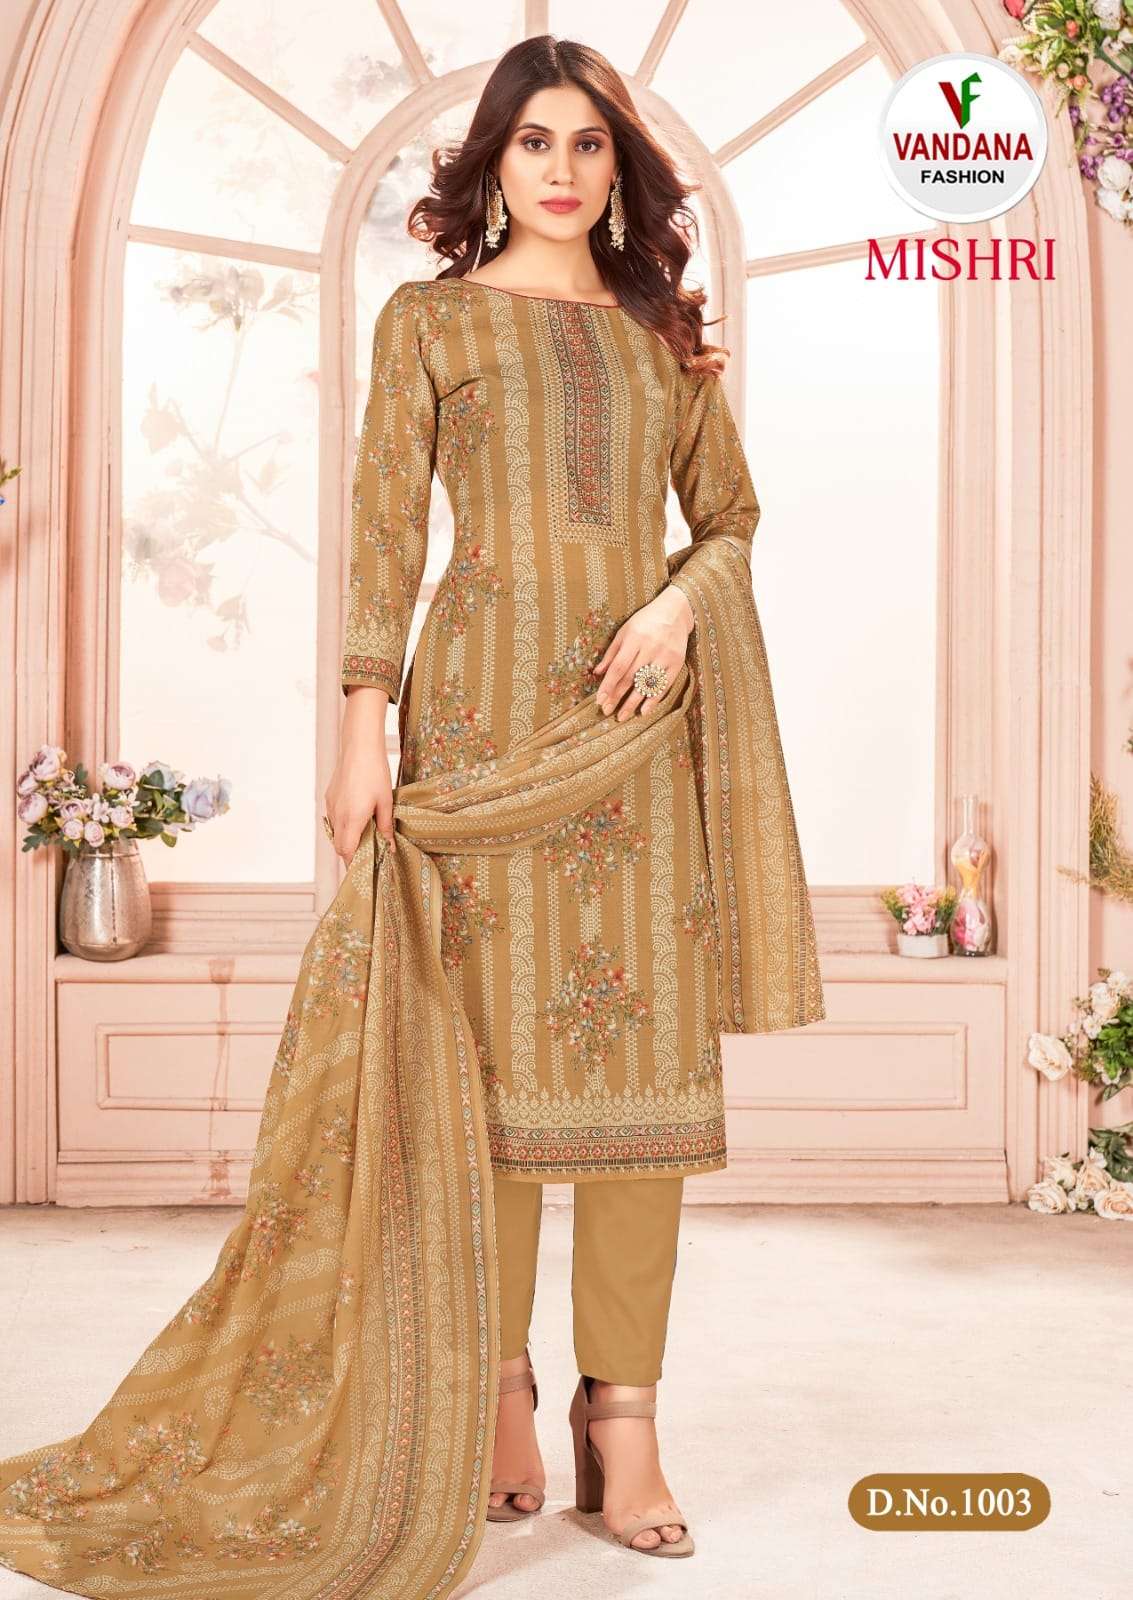 vandana fashion mishri vol-1 1001-1010 series soft cotton designer salwar kameez catalogue online surat 